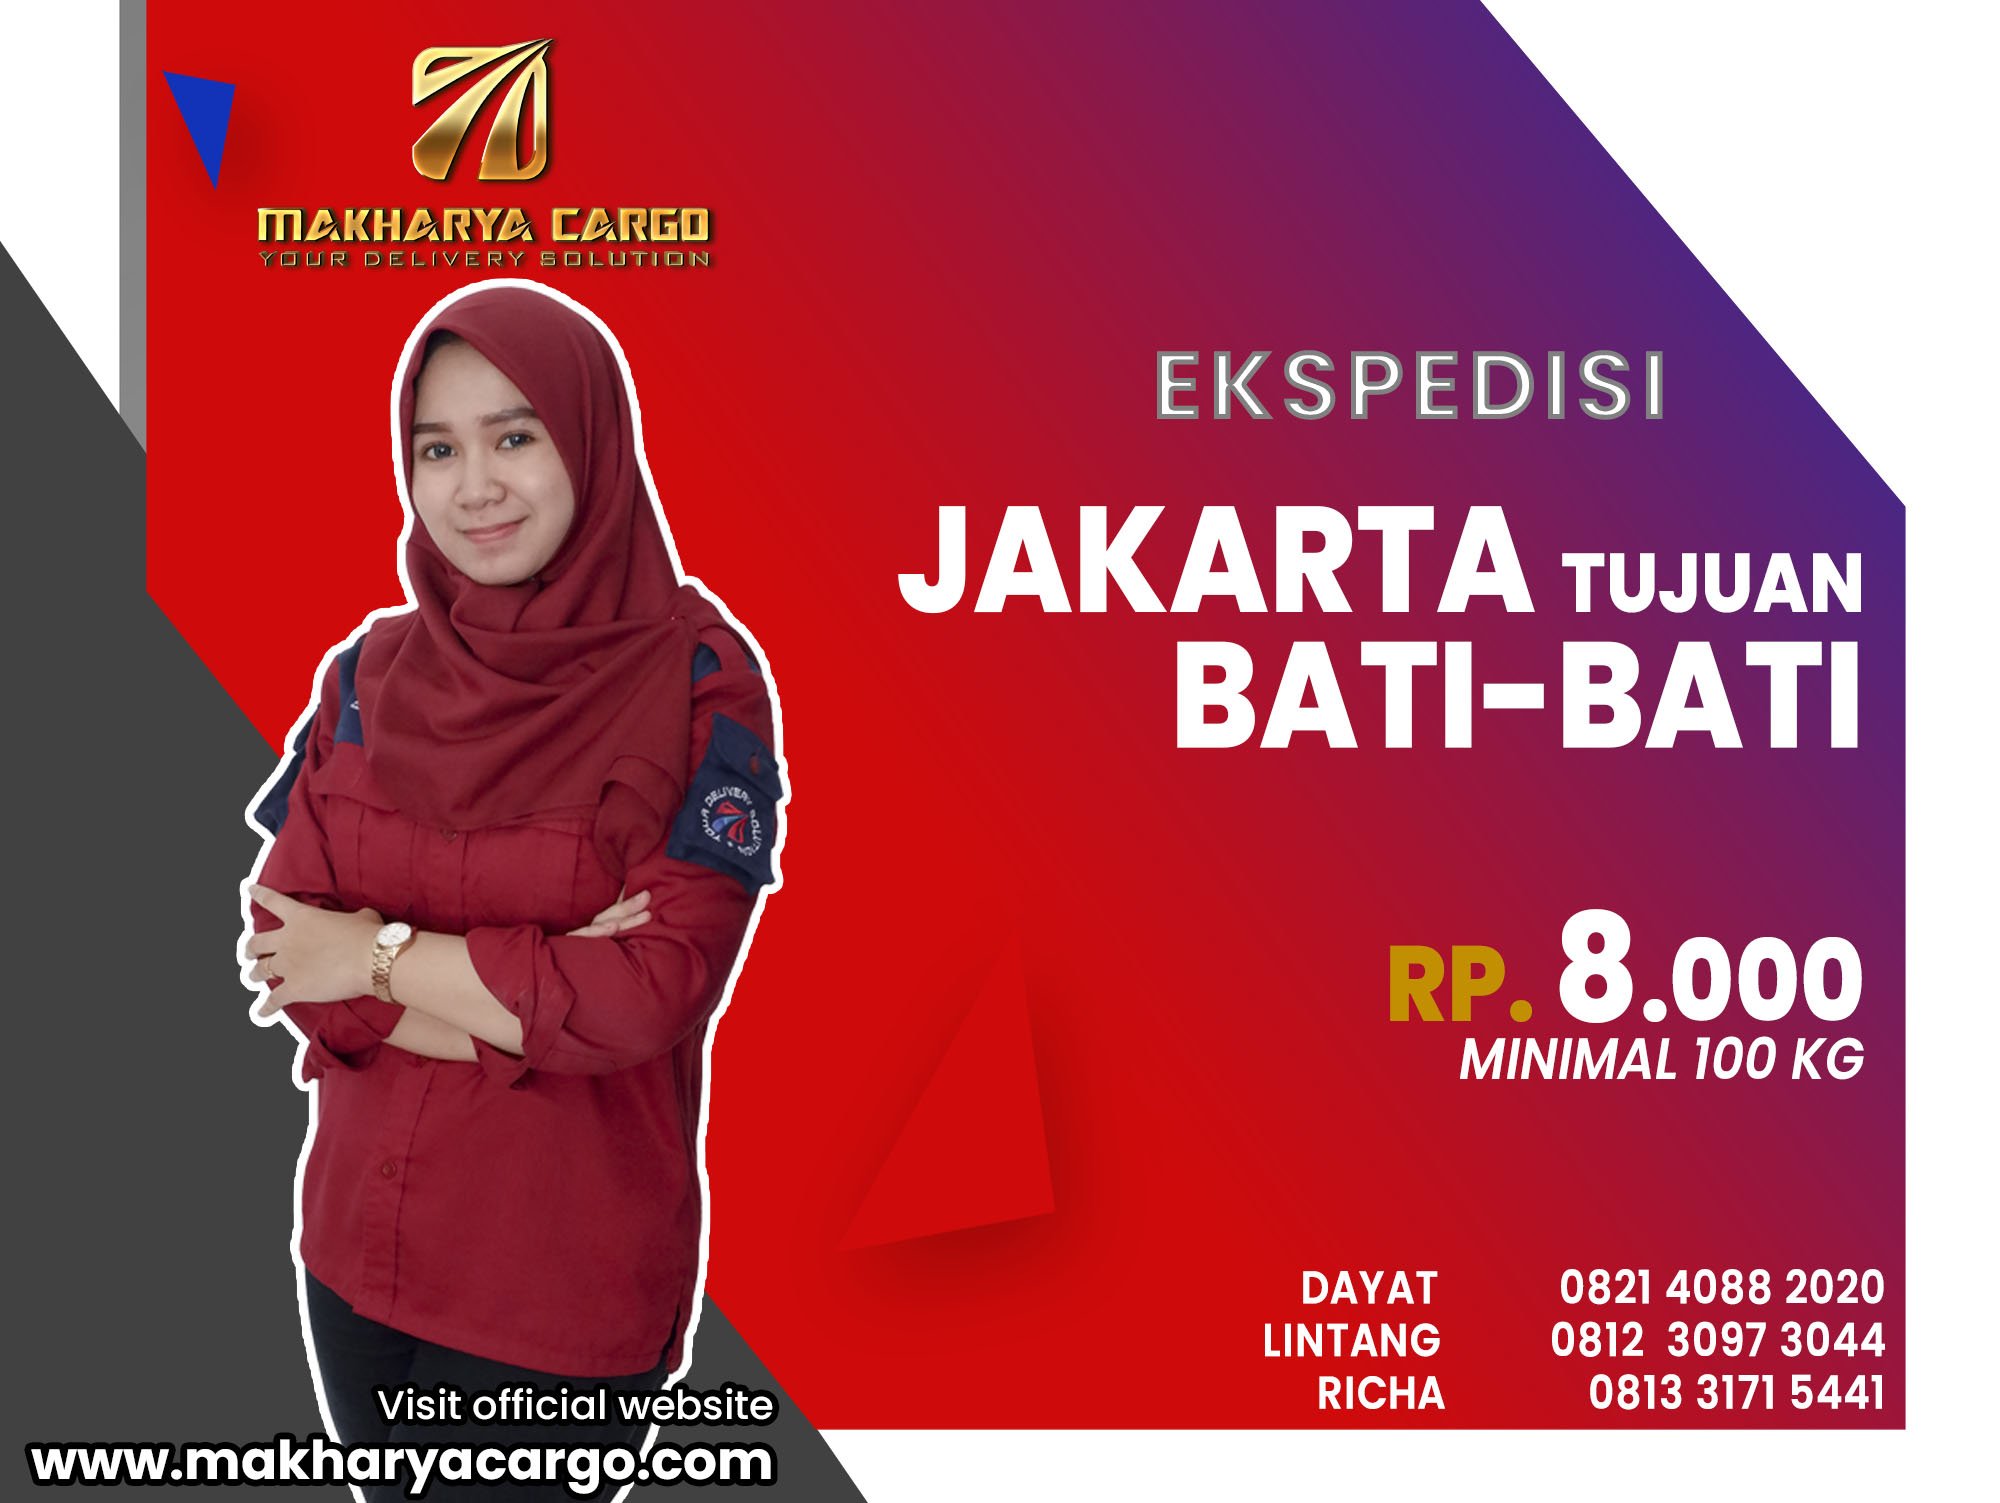 Ekspedisi Jakarta Bati-Bati